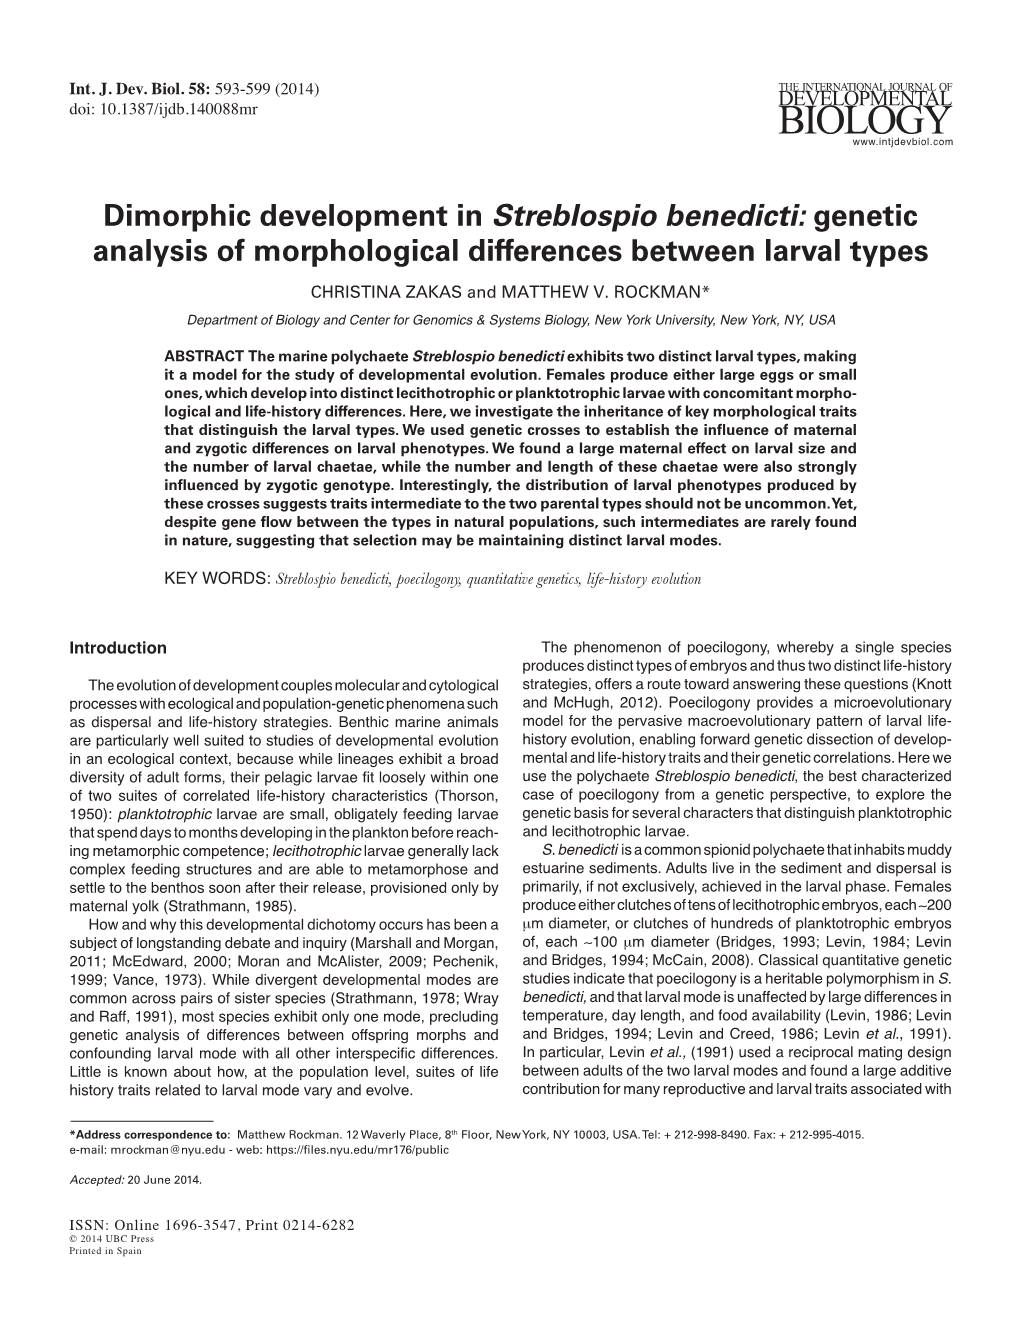 Dimorphic Development in Streblospio Benedicti: Genetic Analysis of Morphological Differences Between Larval Types CHRISTINA ZAKAS and MATTHEW V